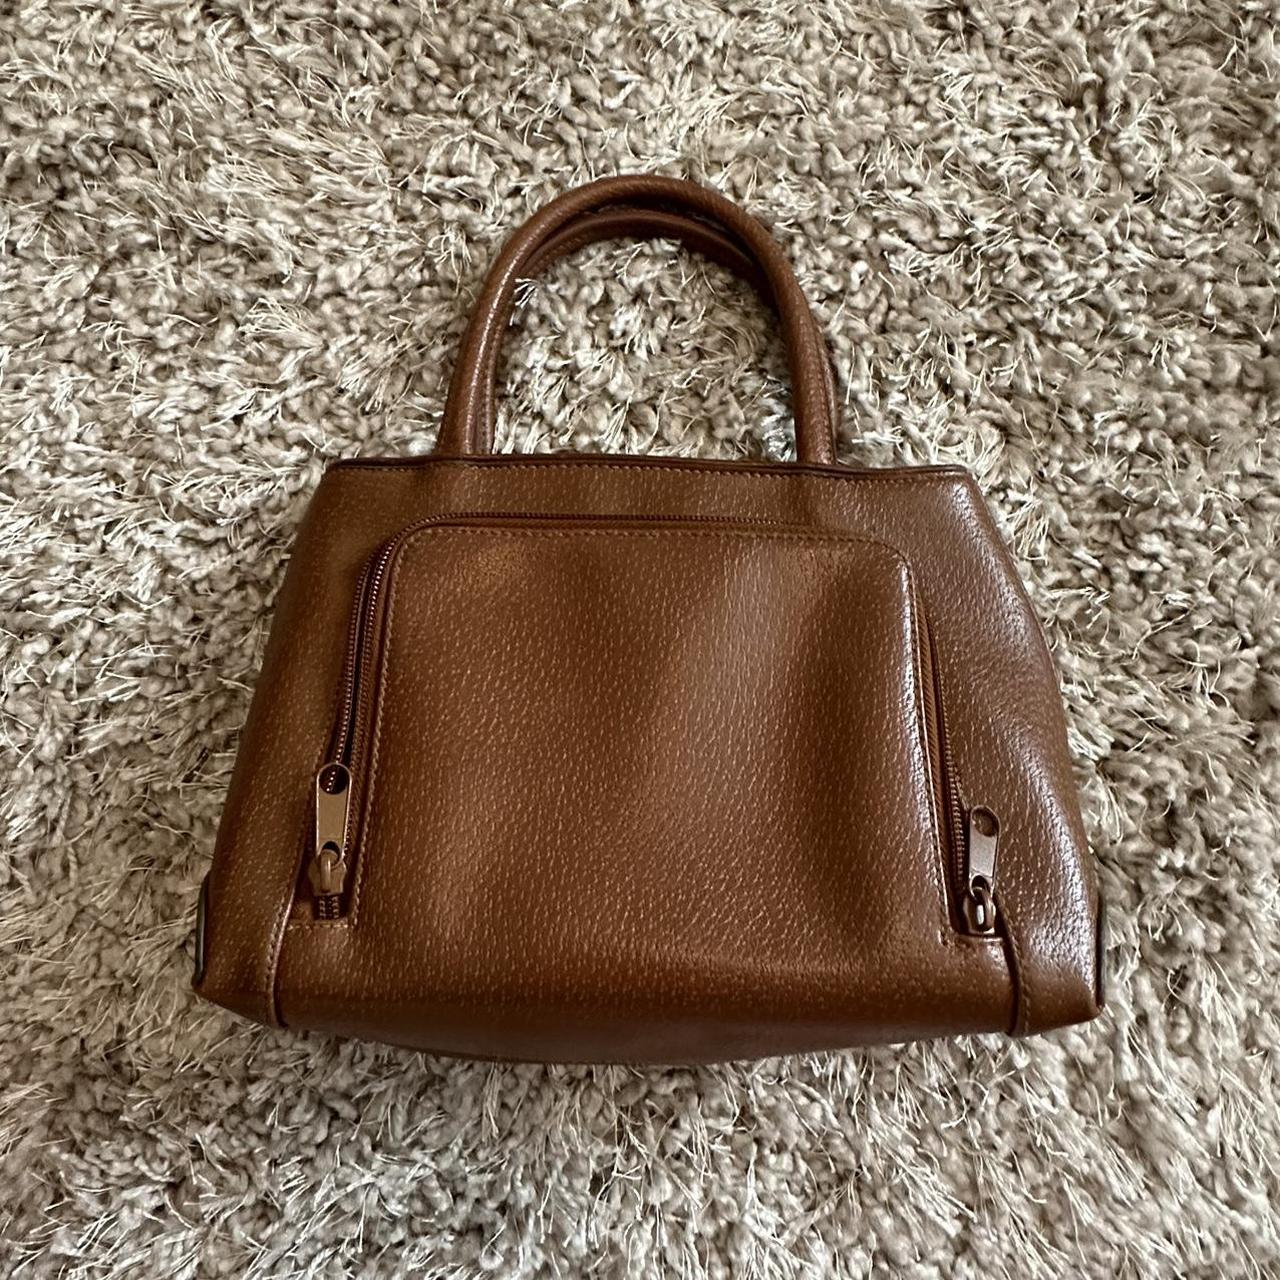 Rosetti Crossbody Handbag Light Brown Faux Leather Purse VGUC | eBay